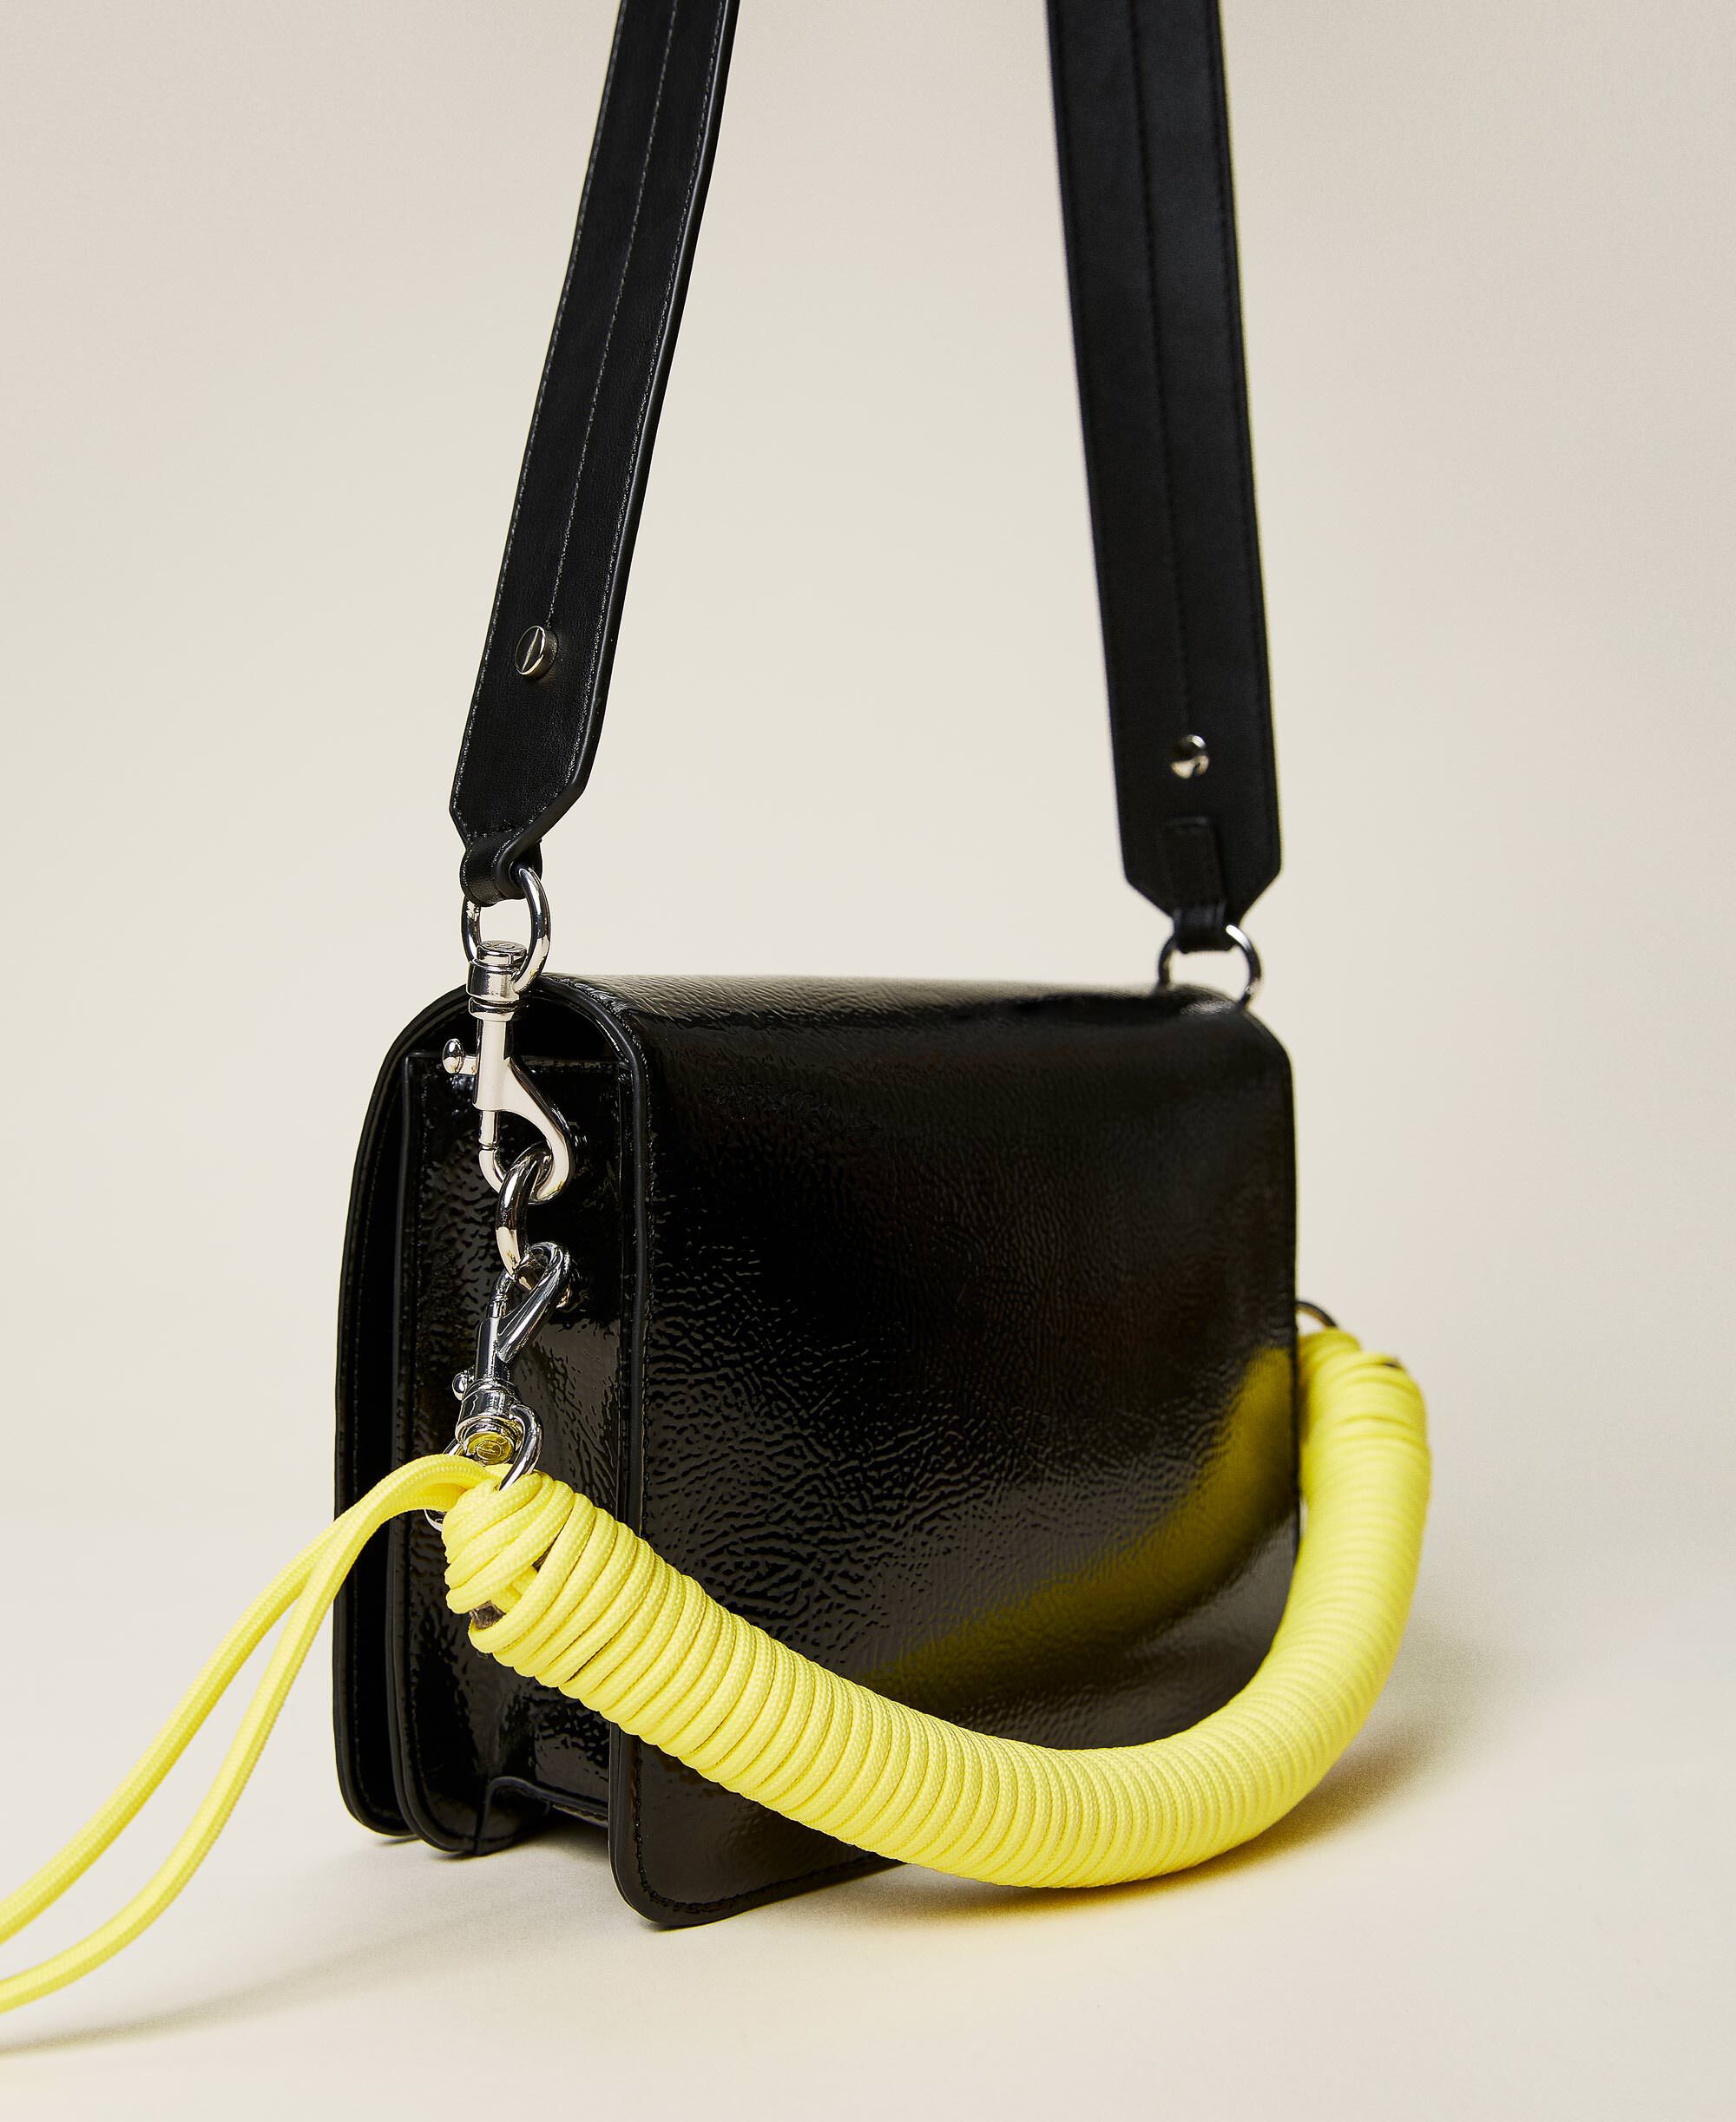 Ladies Faux Patent Leather Women Shoulder Bag Cross Body Handbag Tote Pom Pom UK 